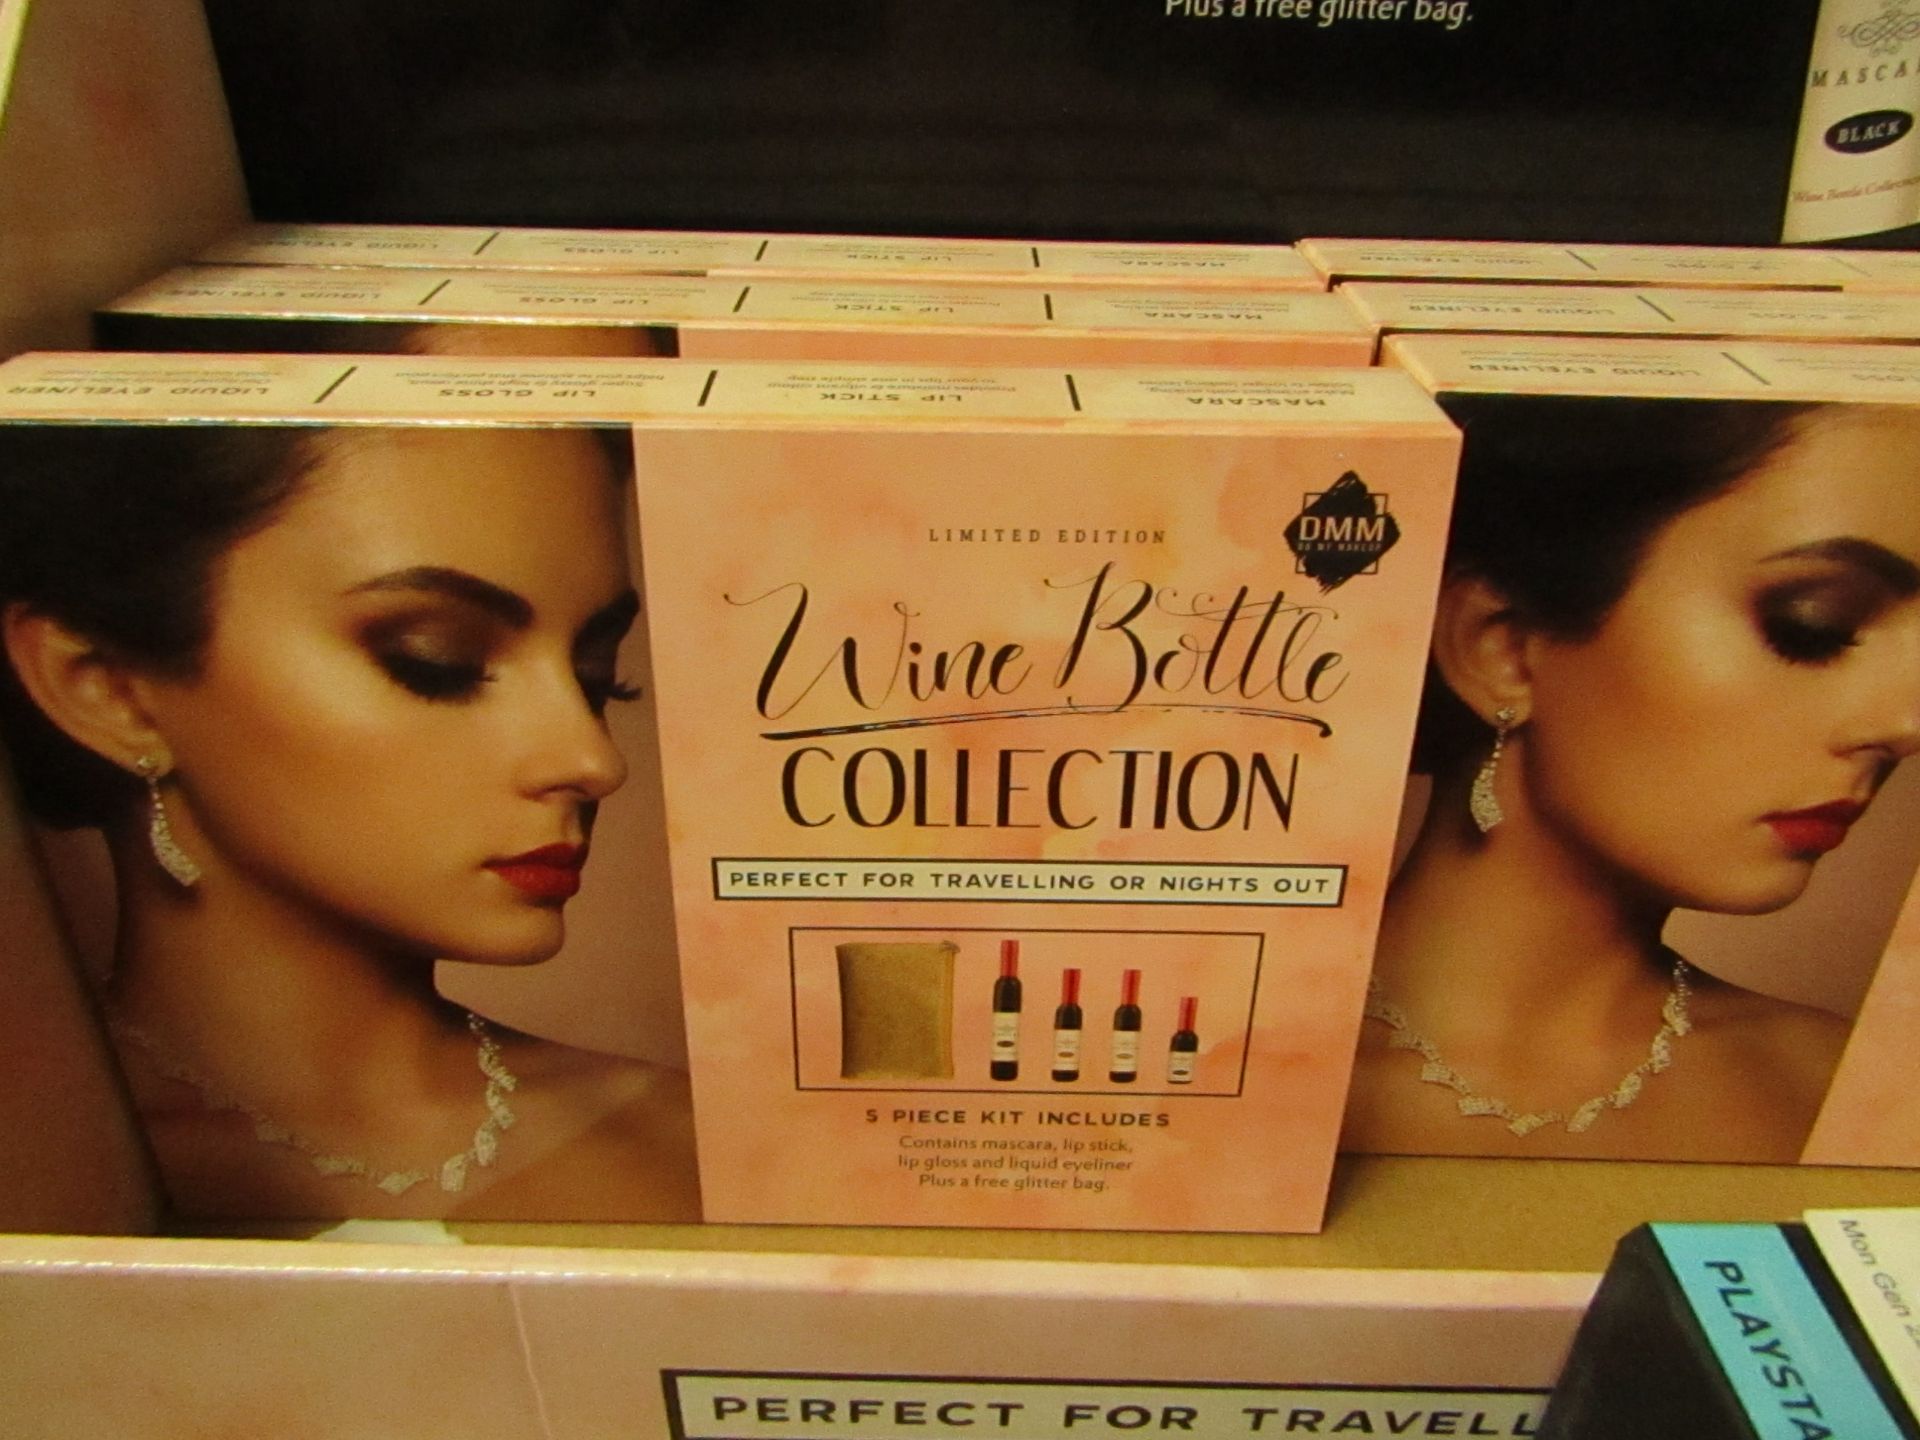 Wine Bottle Collection - 5 Piece kit Includes Mascara, Lip Stick, Lip Gloss, Liquid Eyeliner + A